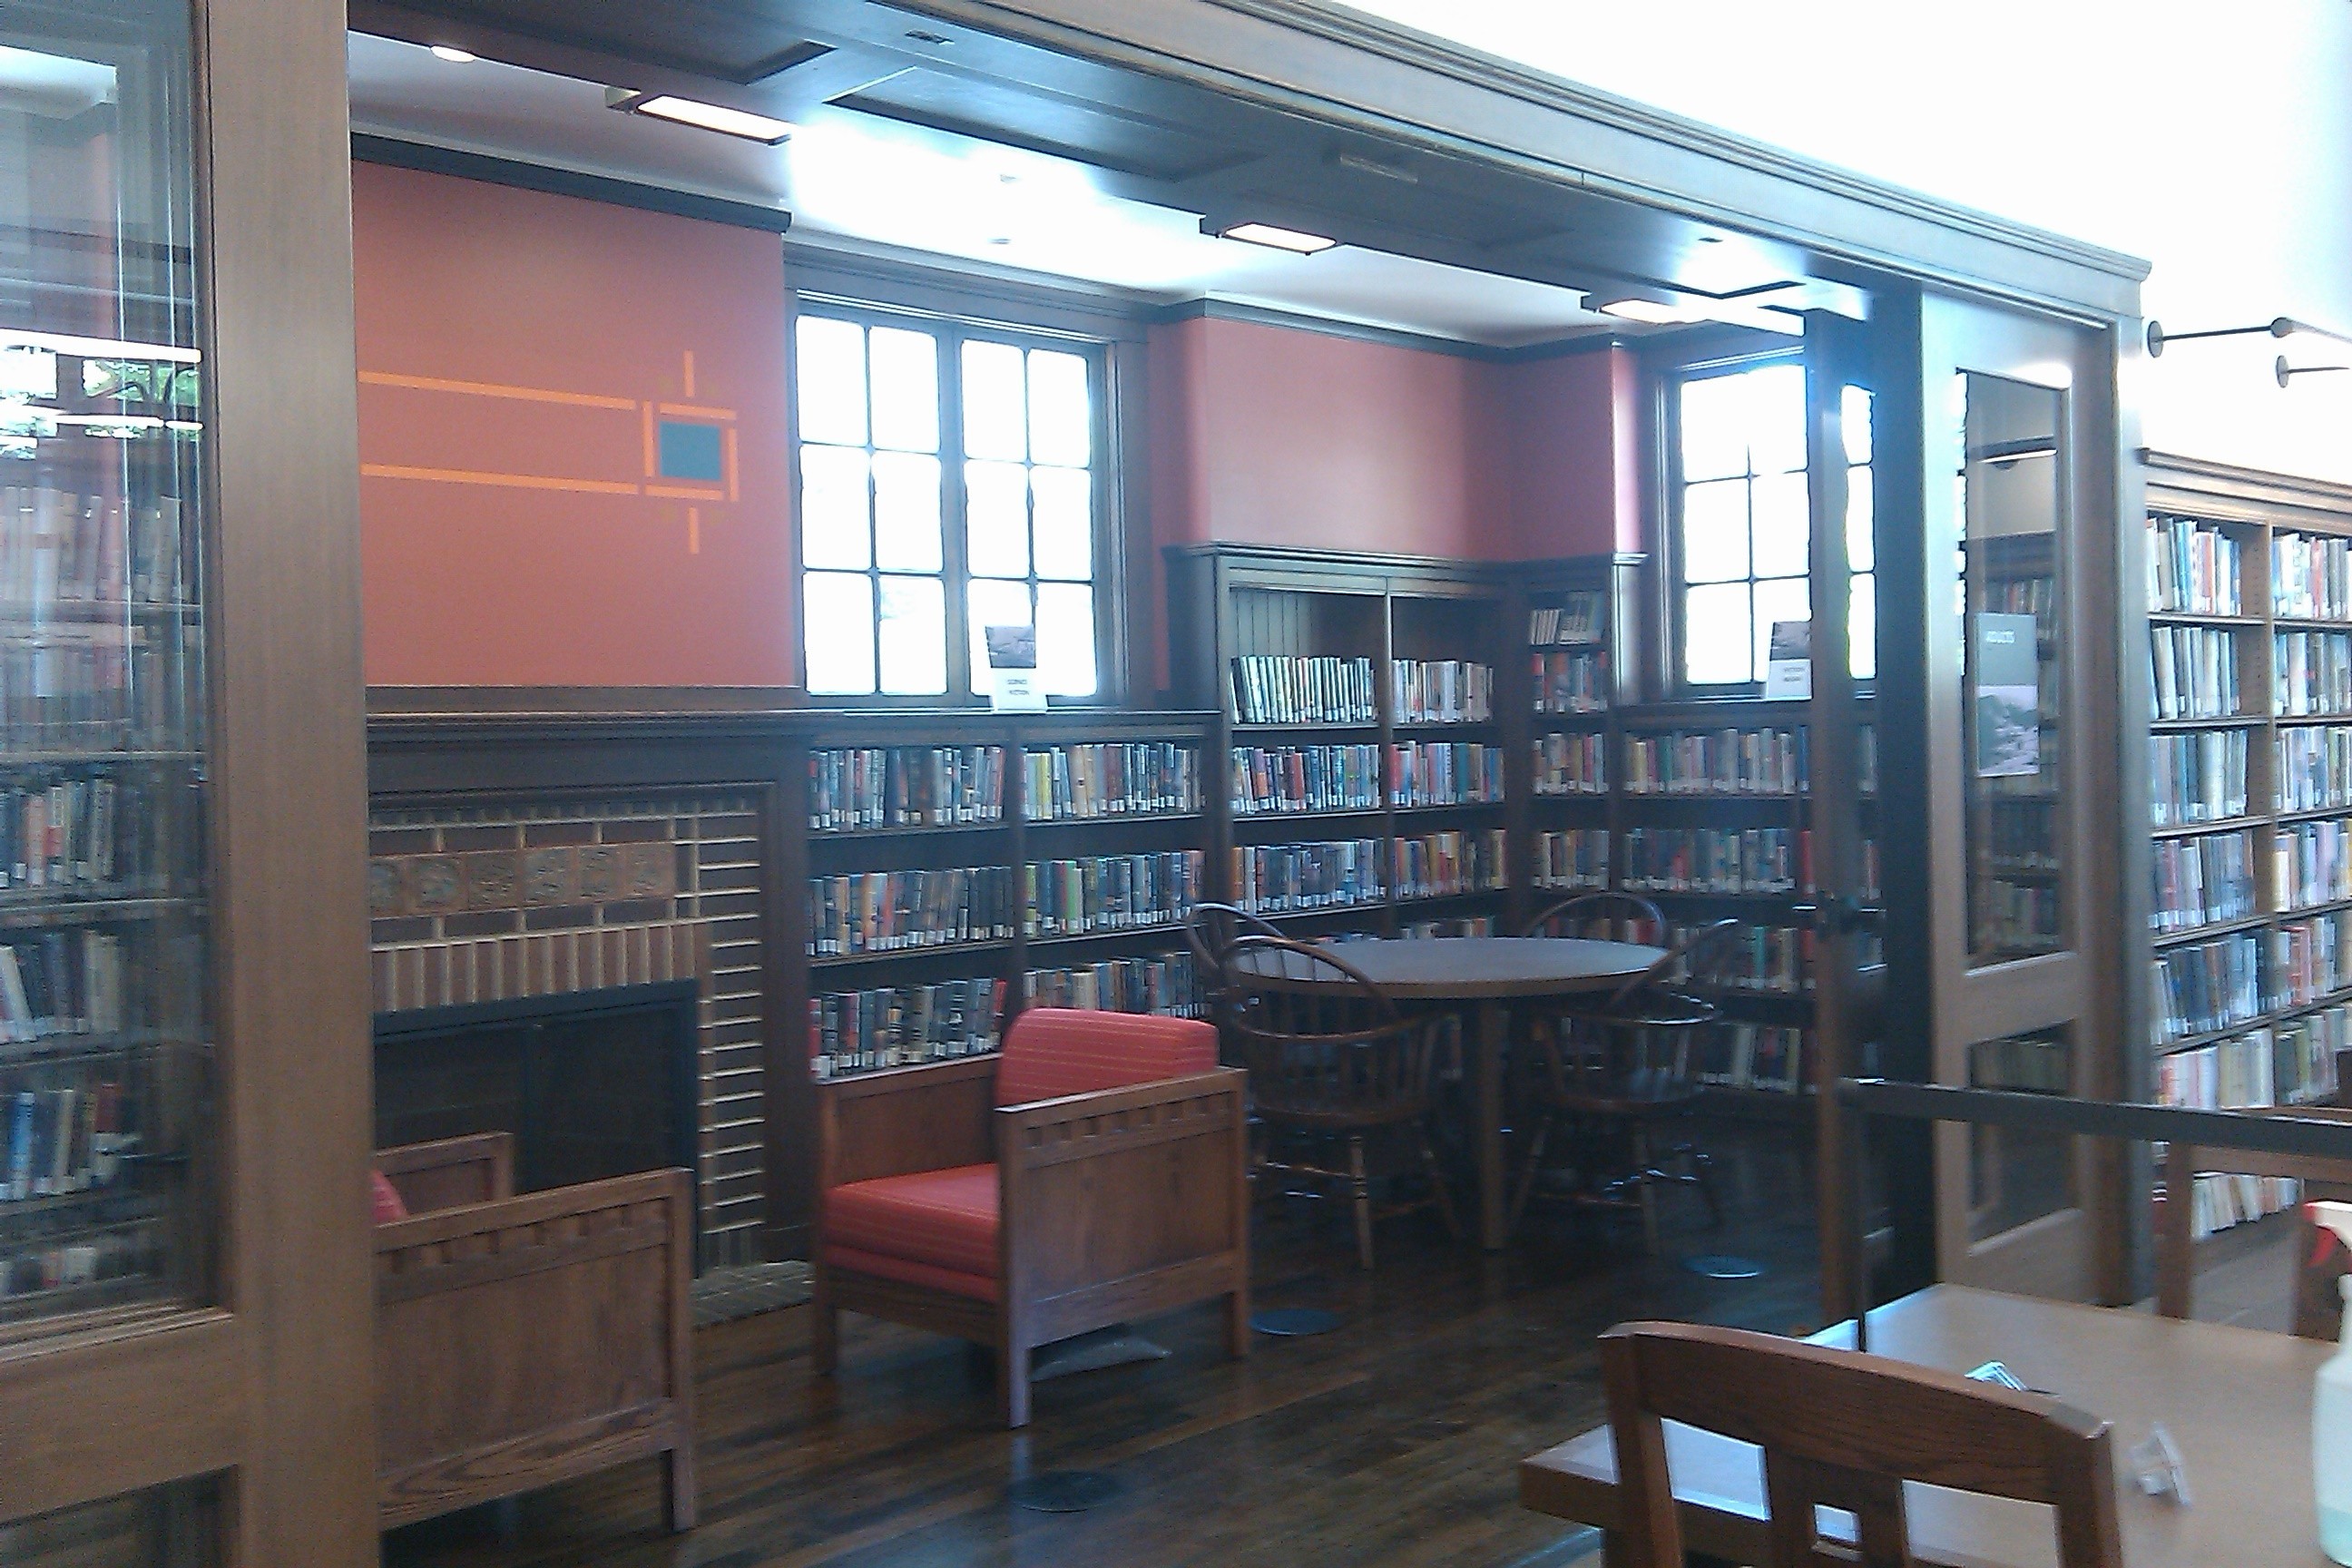 Chess Club @ Claremont  Berkeley Public Library